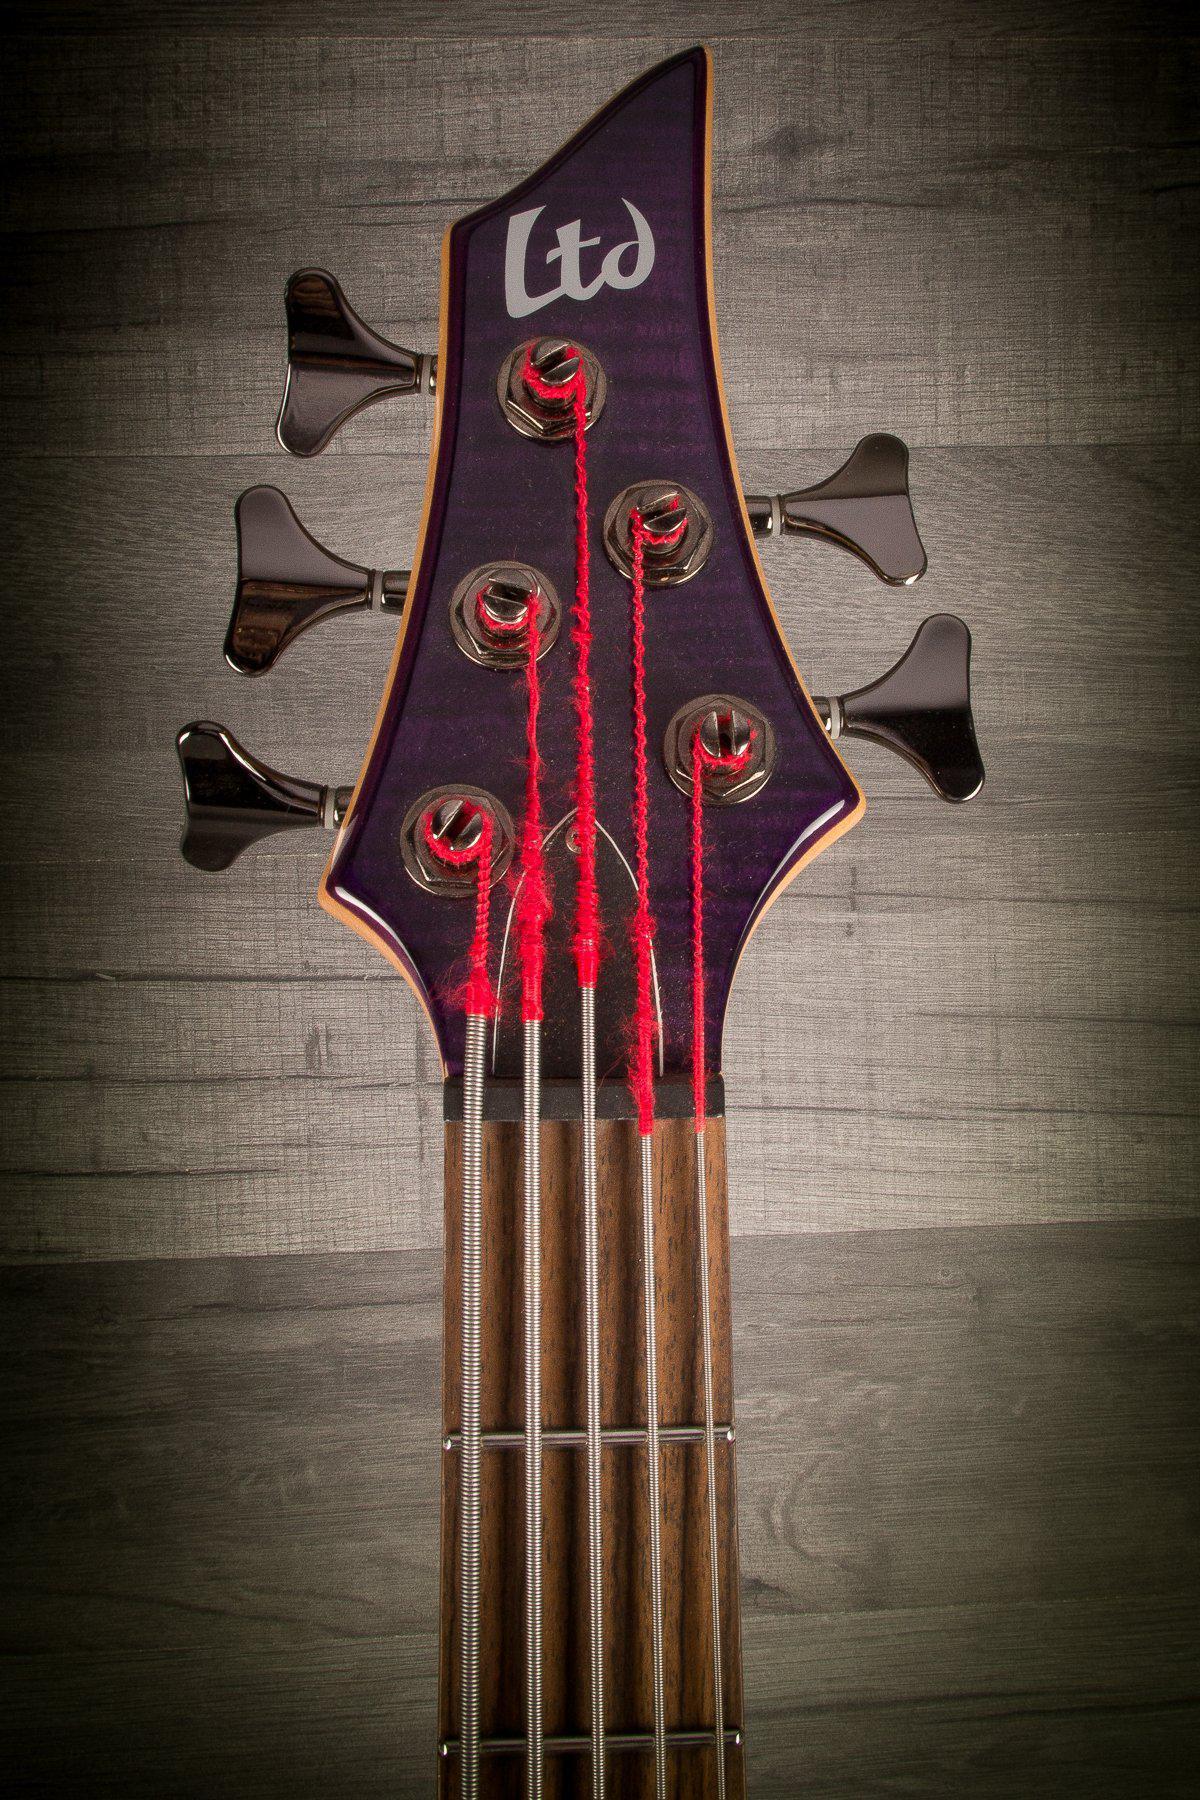 ESP Bass Guitar USED - ESP LTD F-155DX Dark See Thru Purple